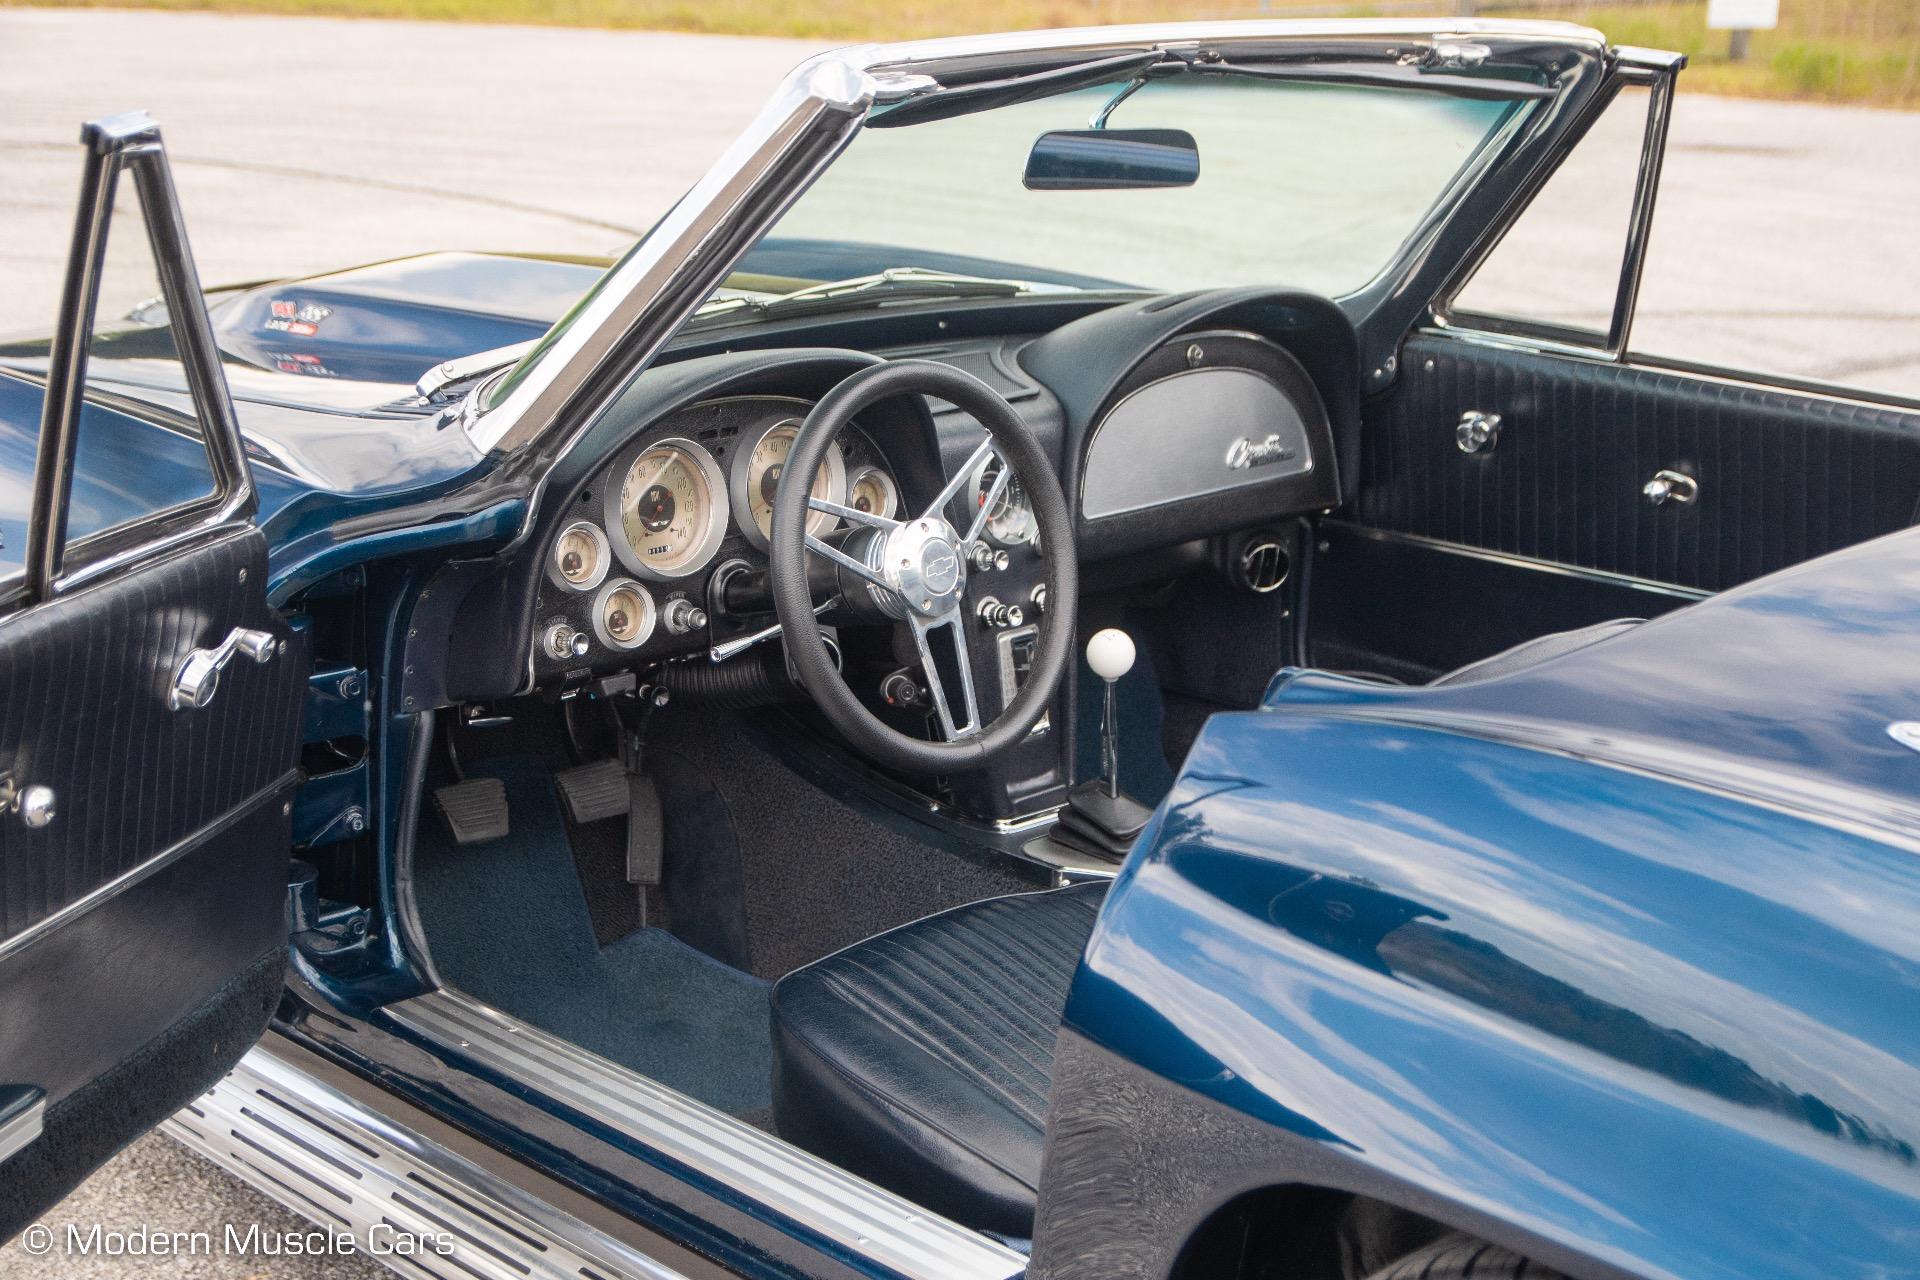 1964 Chevrolet Corvette Stingray Convertible - $155,900